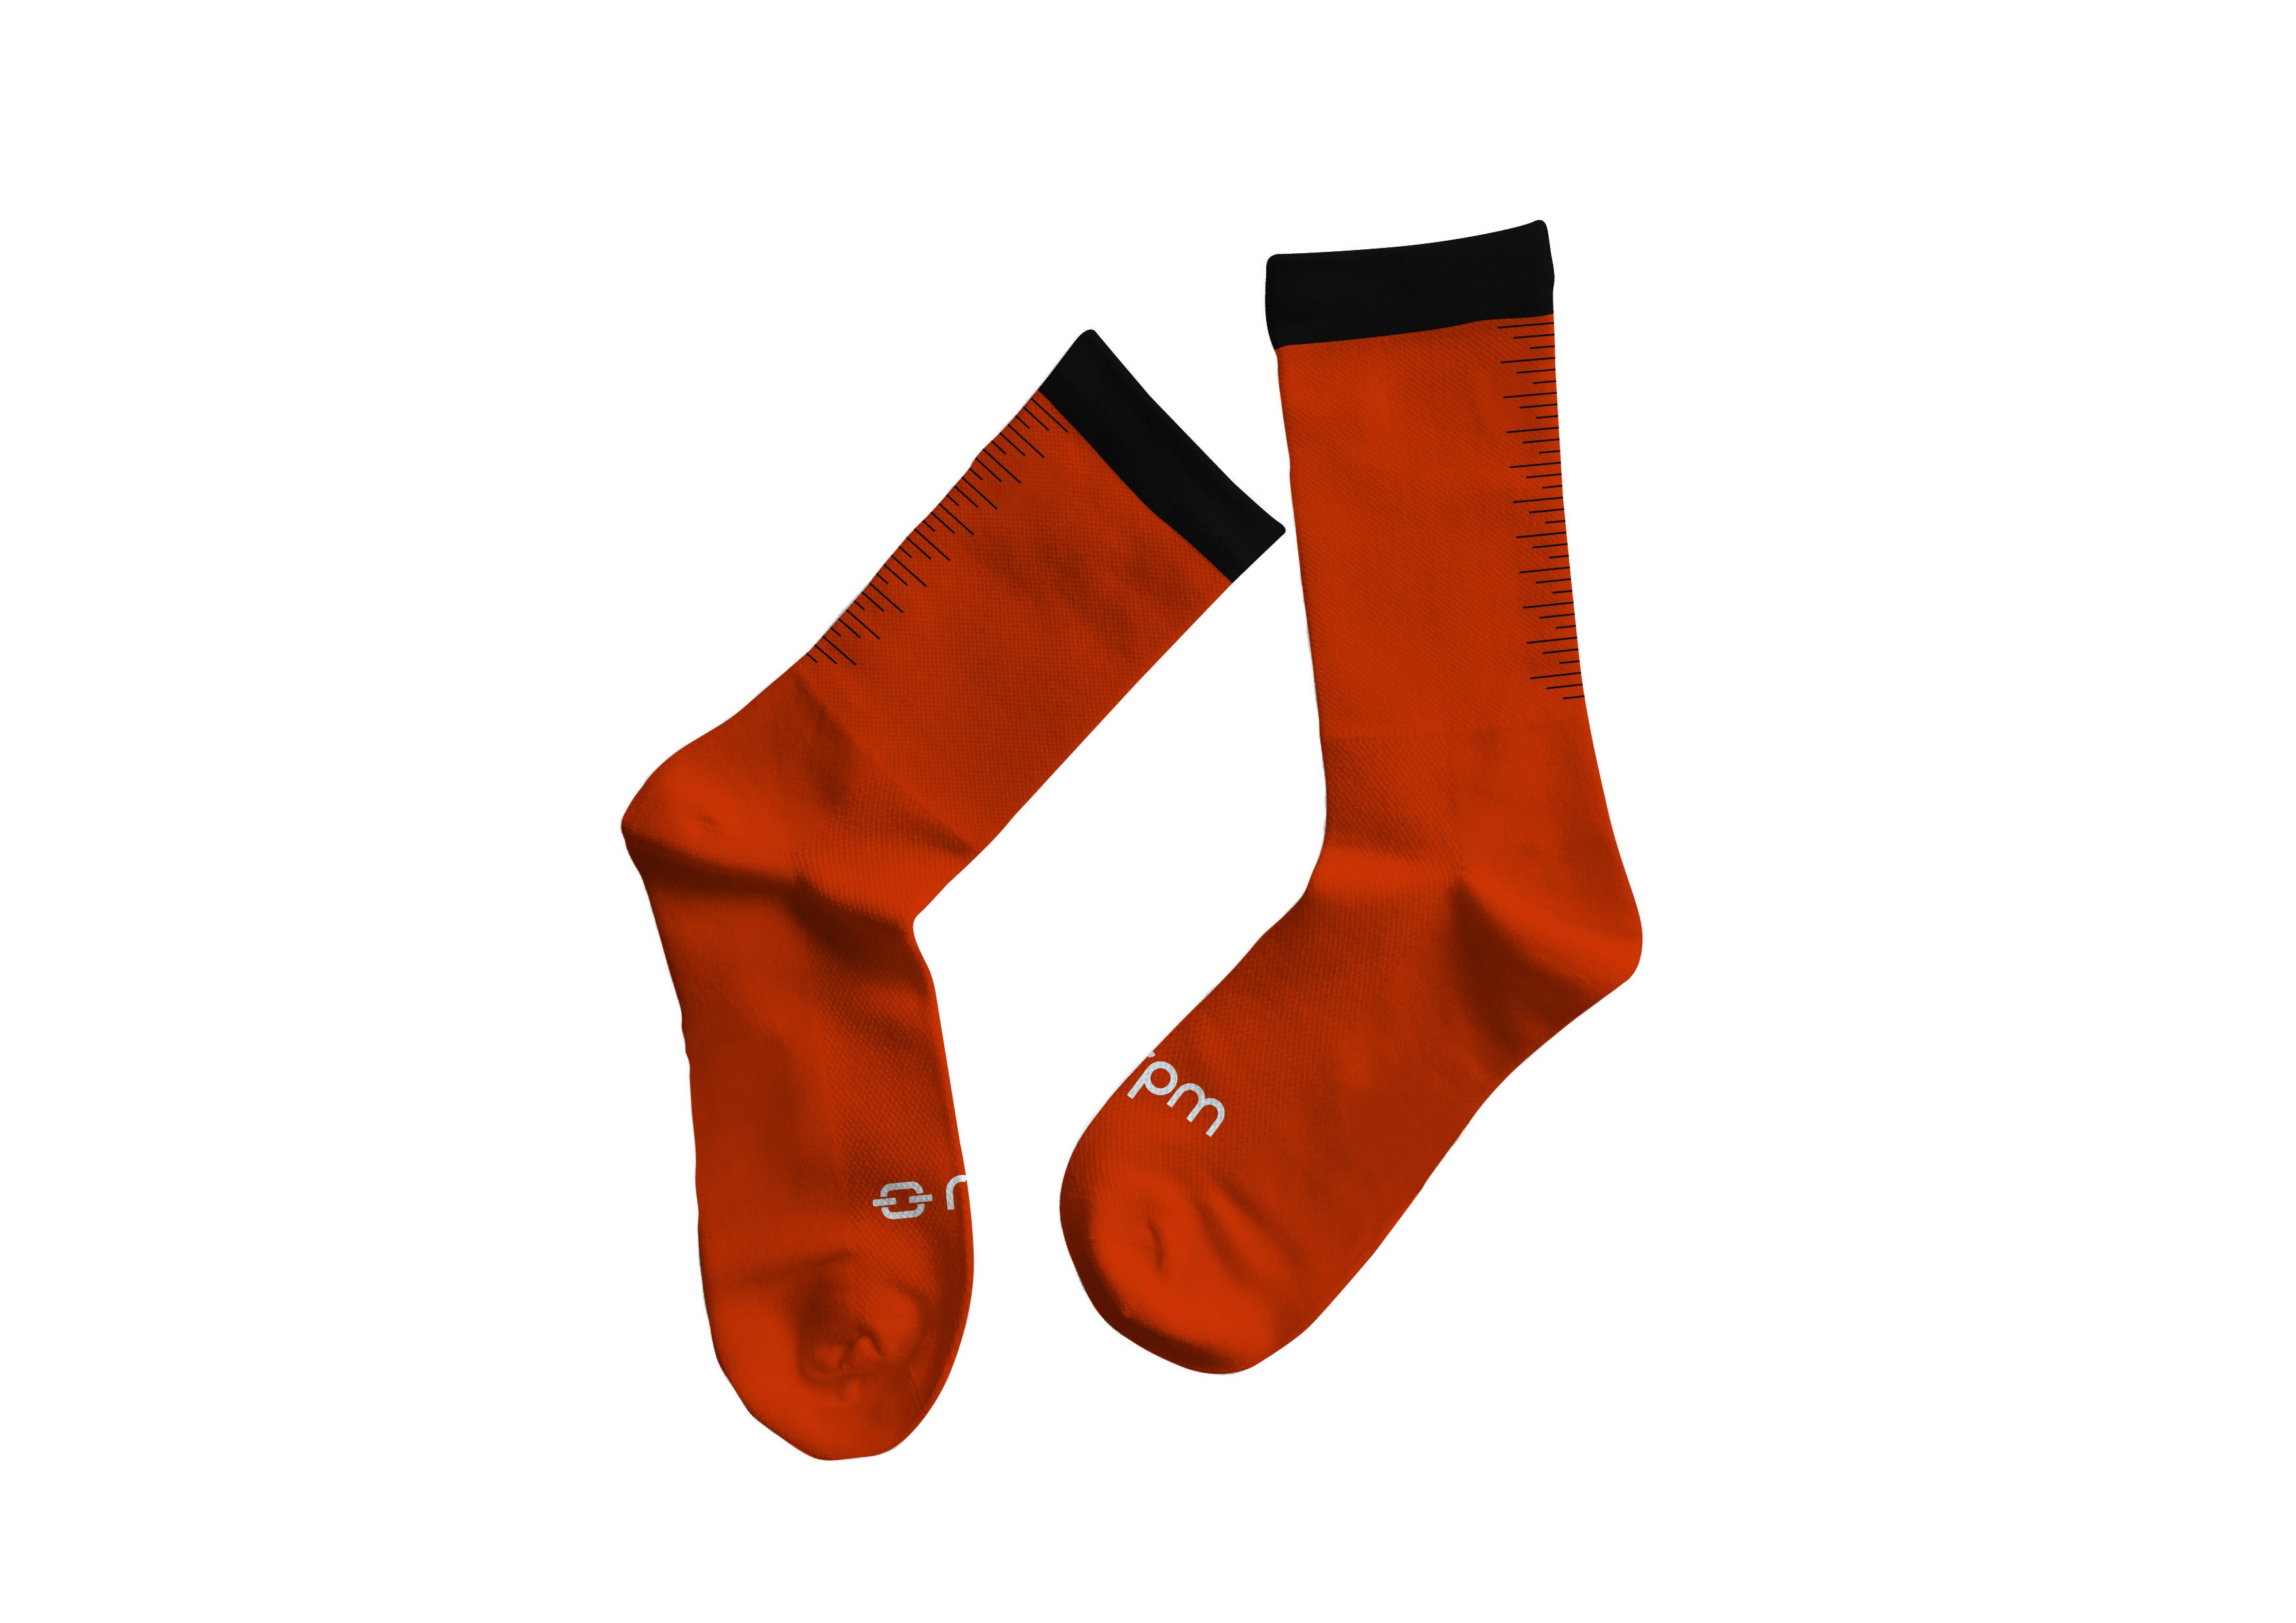 Socks - PDP Orange